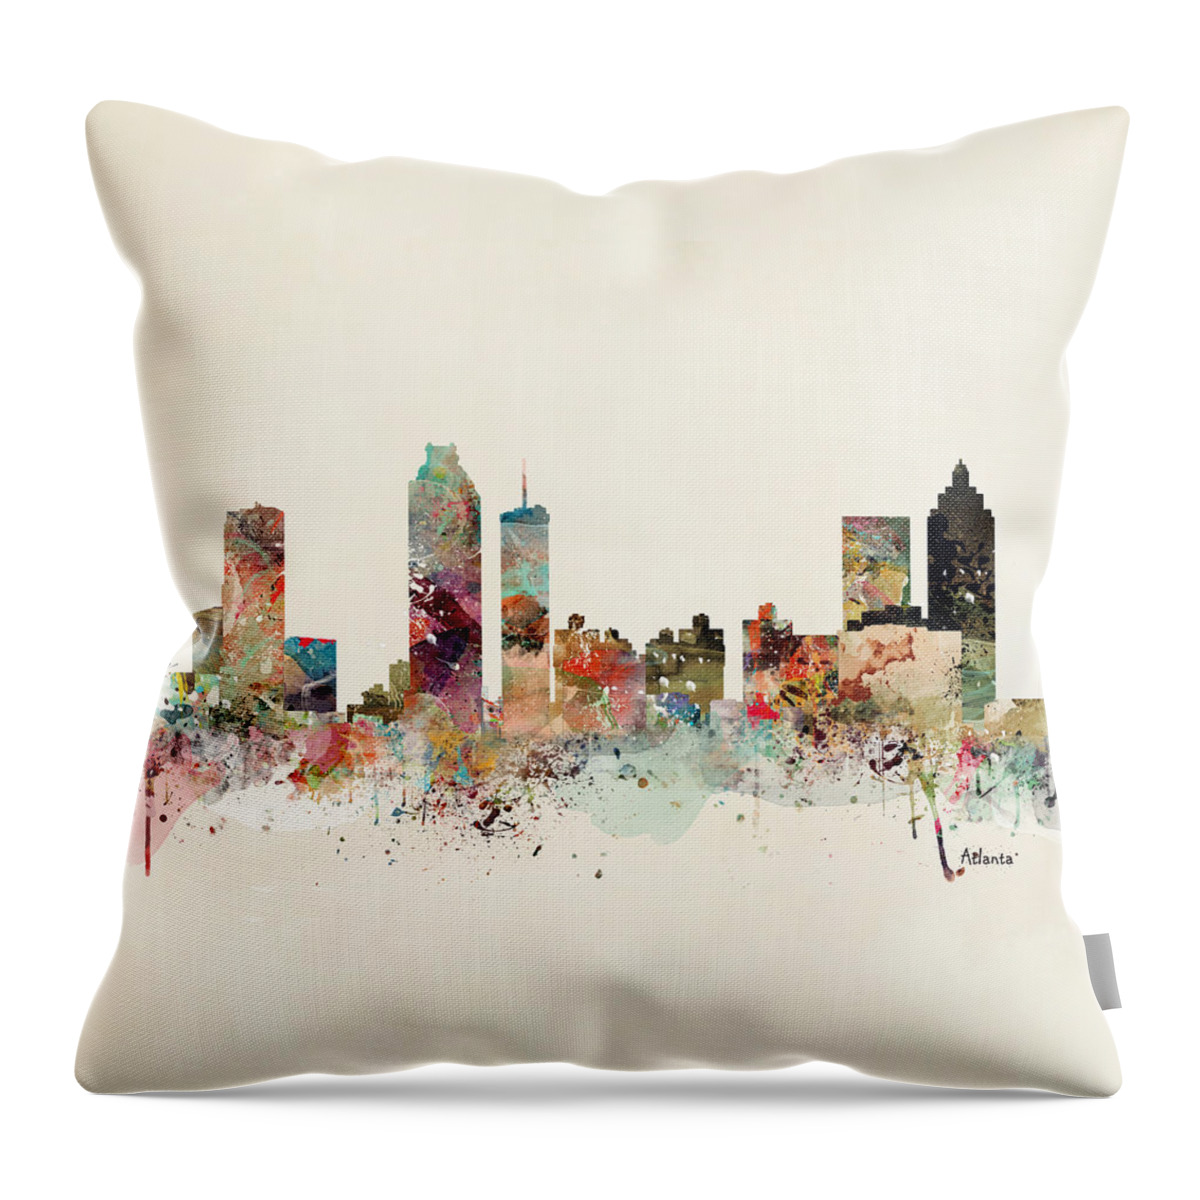 Atlanta Throw Pillow featuring the painting Atlanta Skyline by Bri Buckley